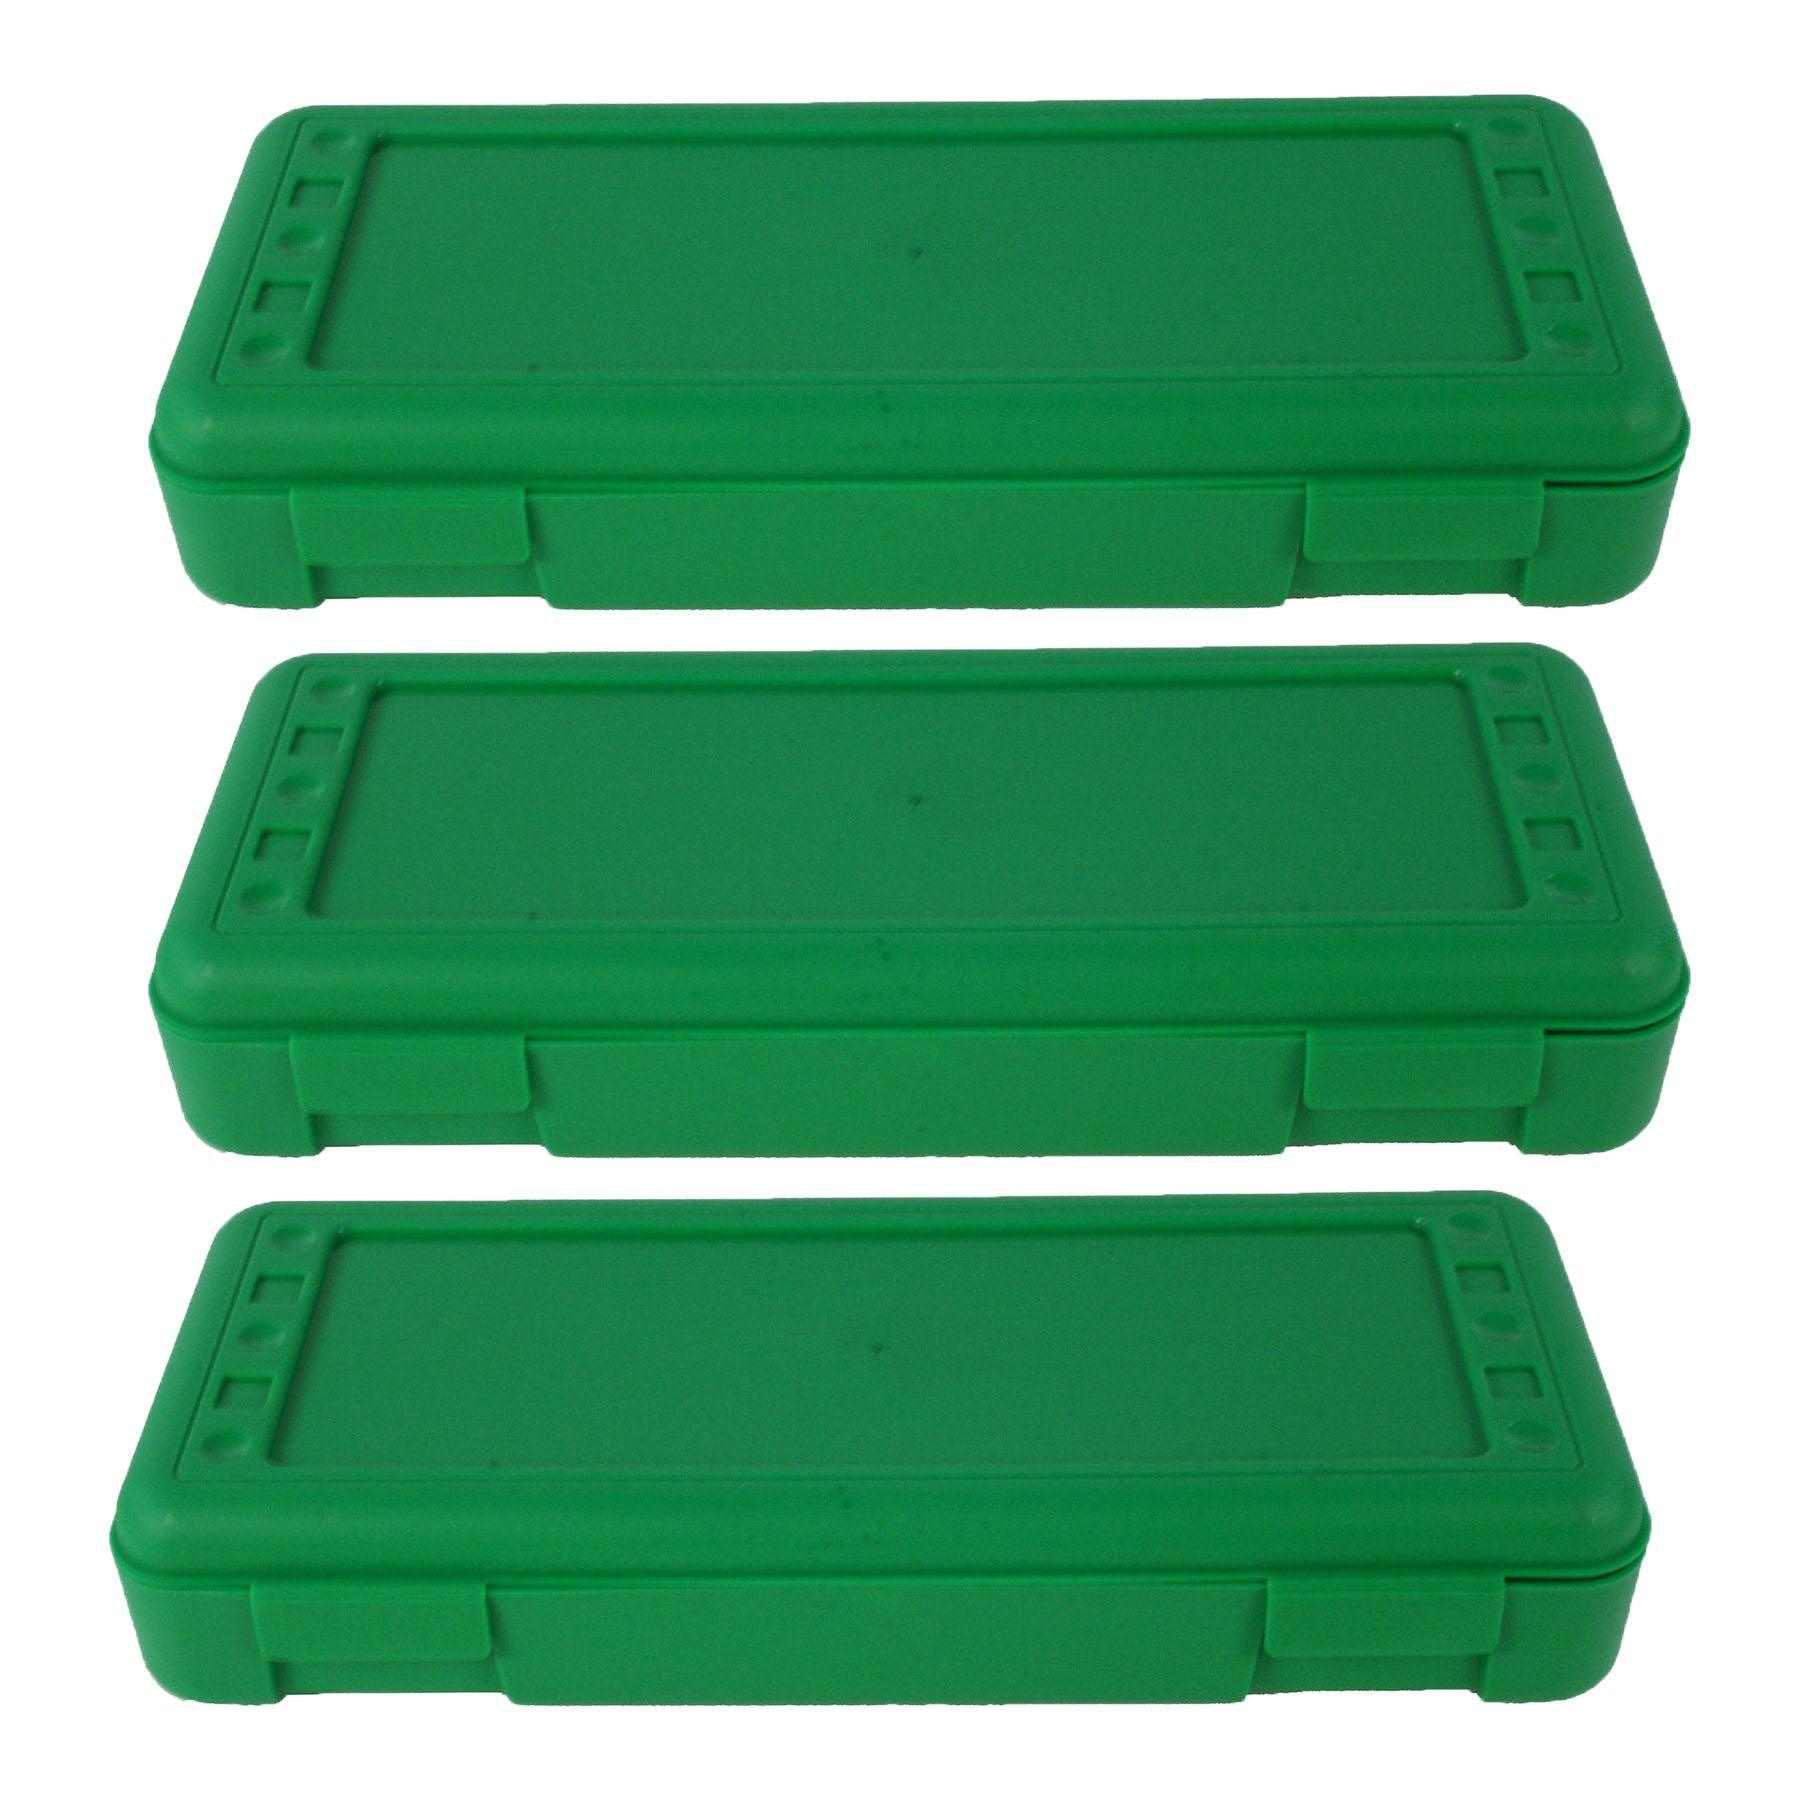 Ruler Box, Green, Pack of 3 - Loomini